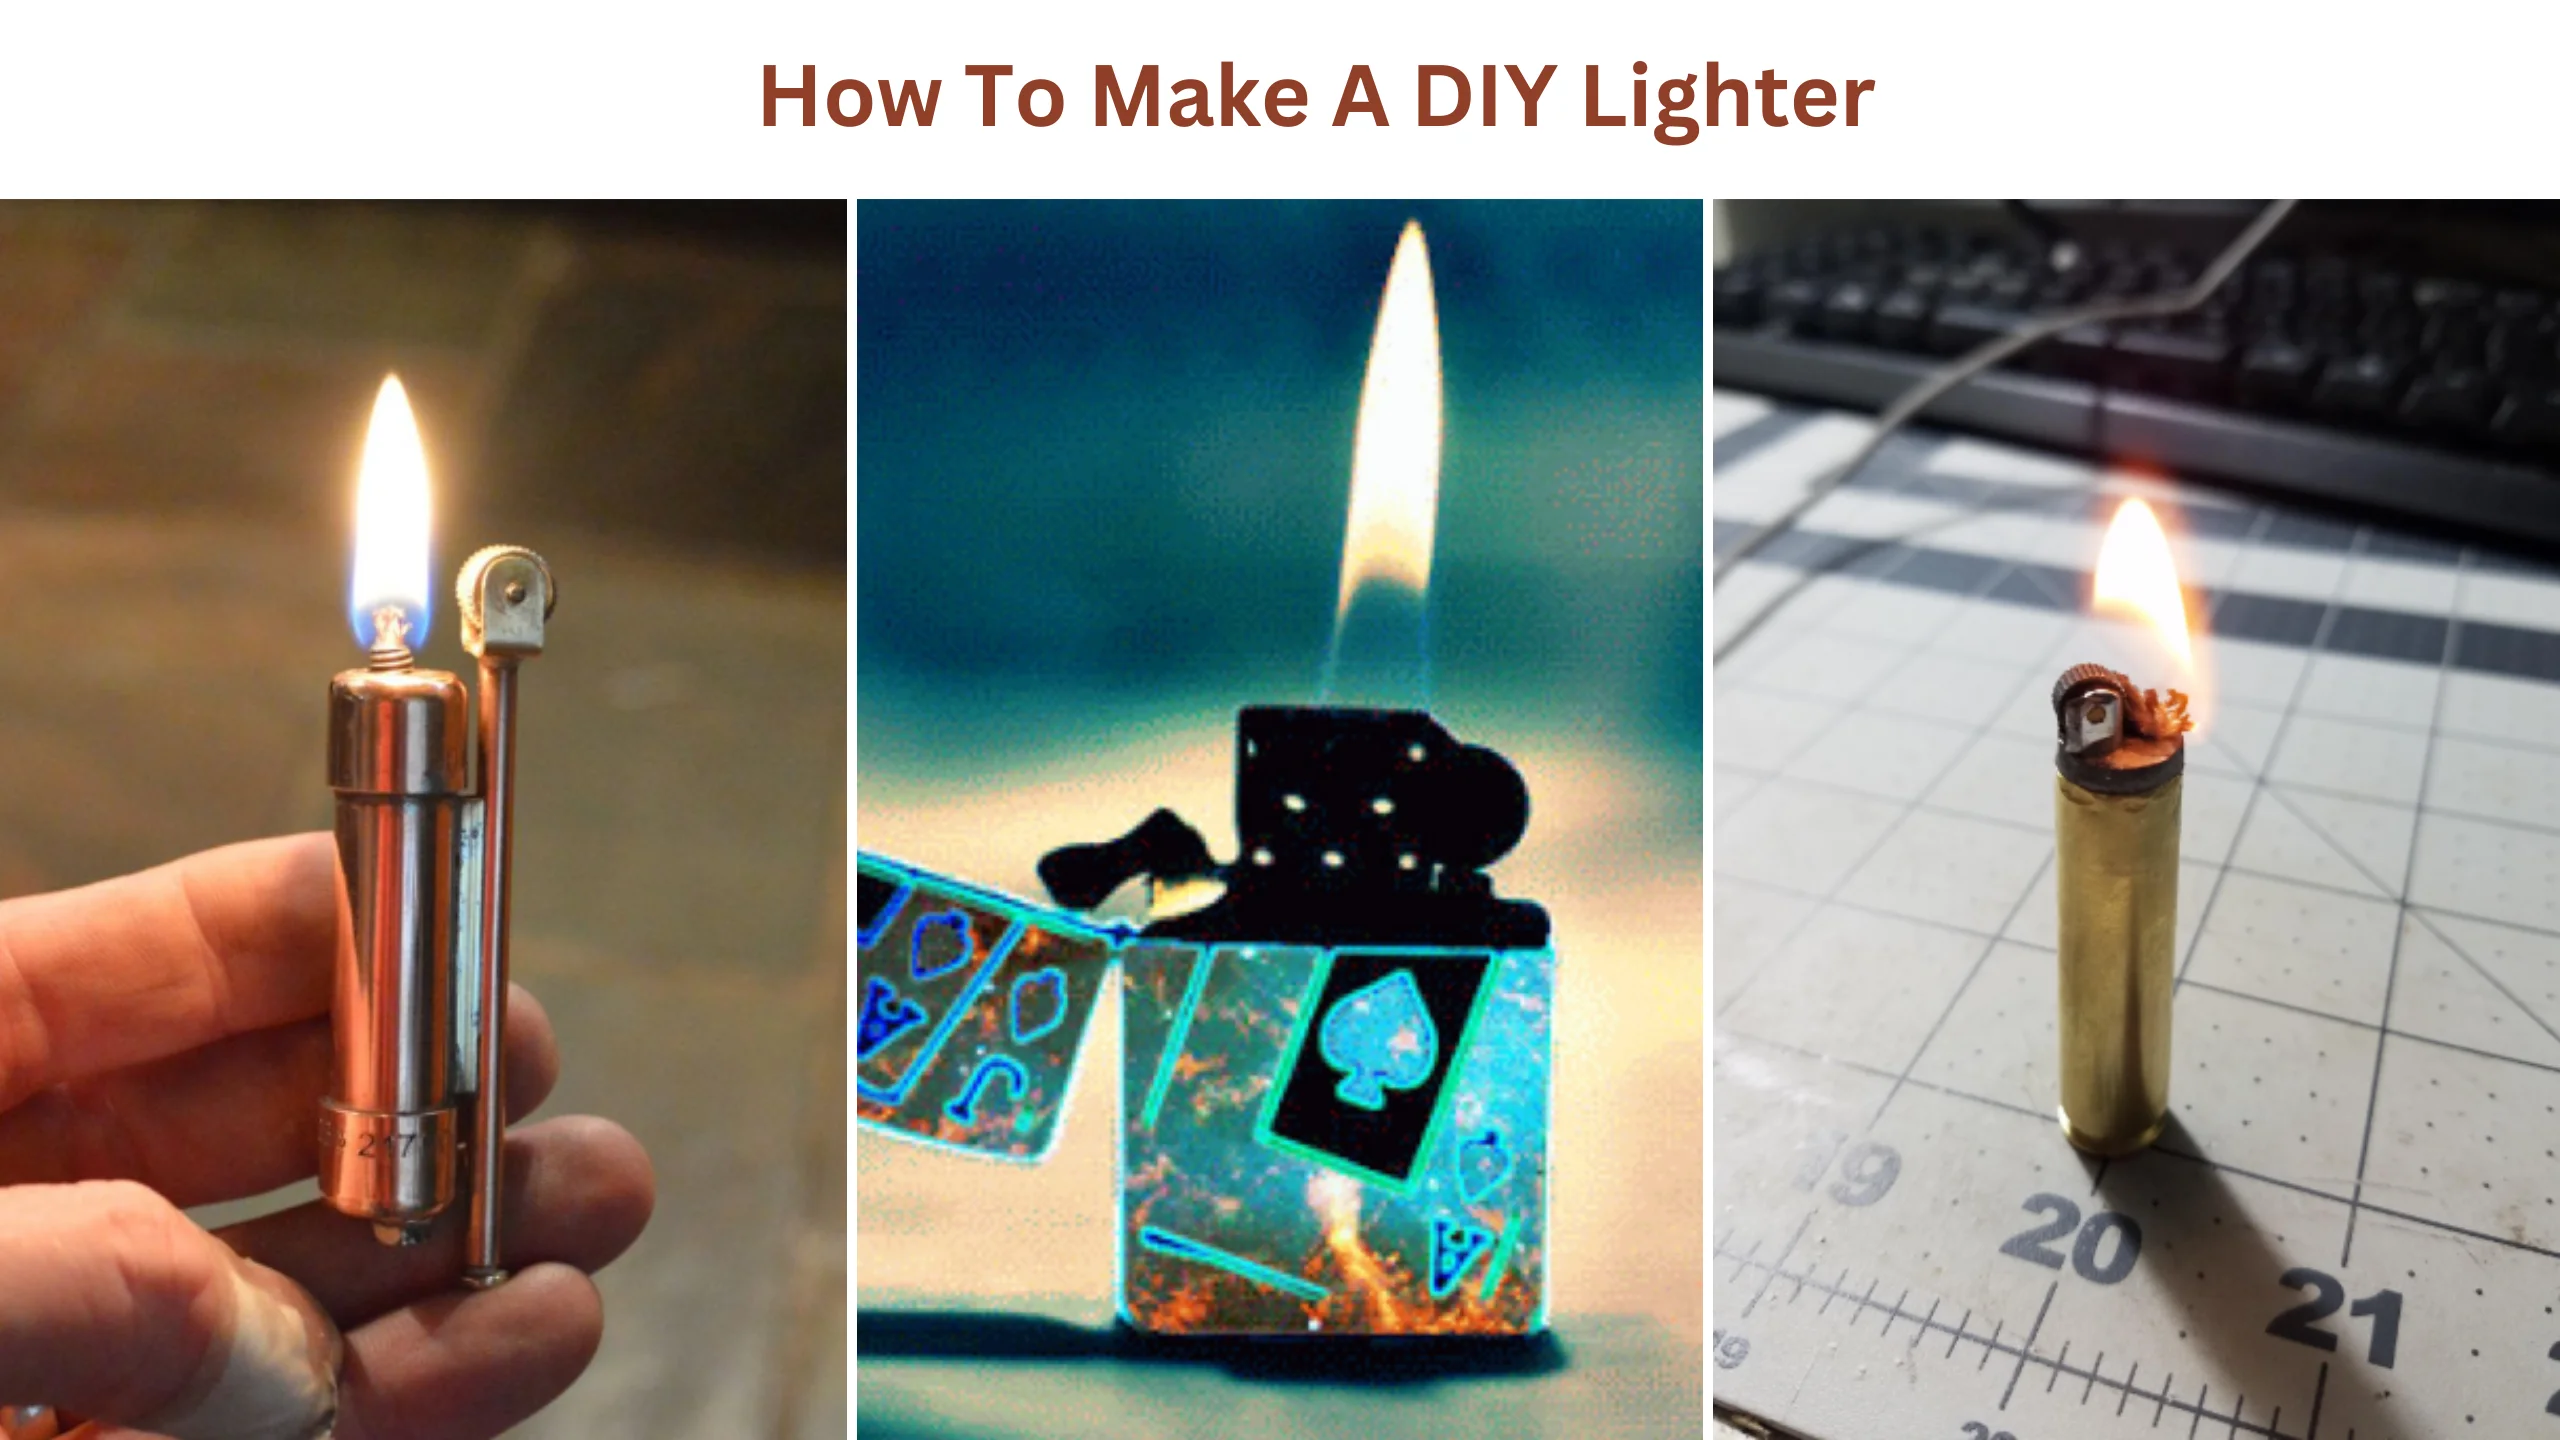 How to make a DIY lighter